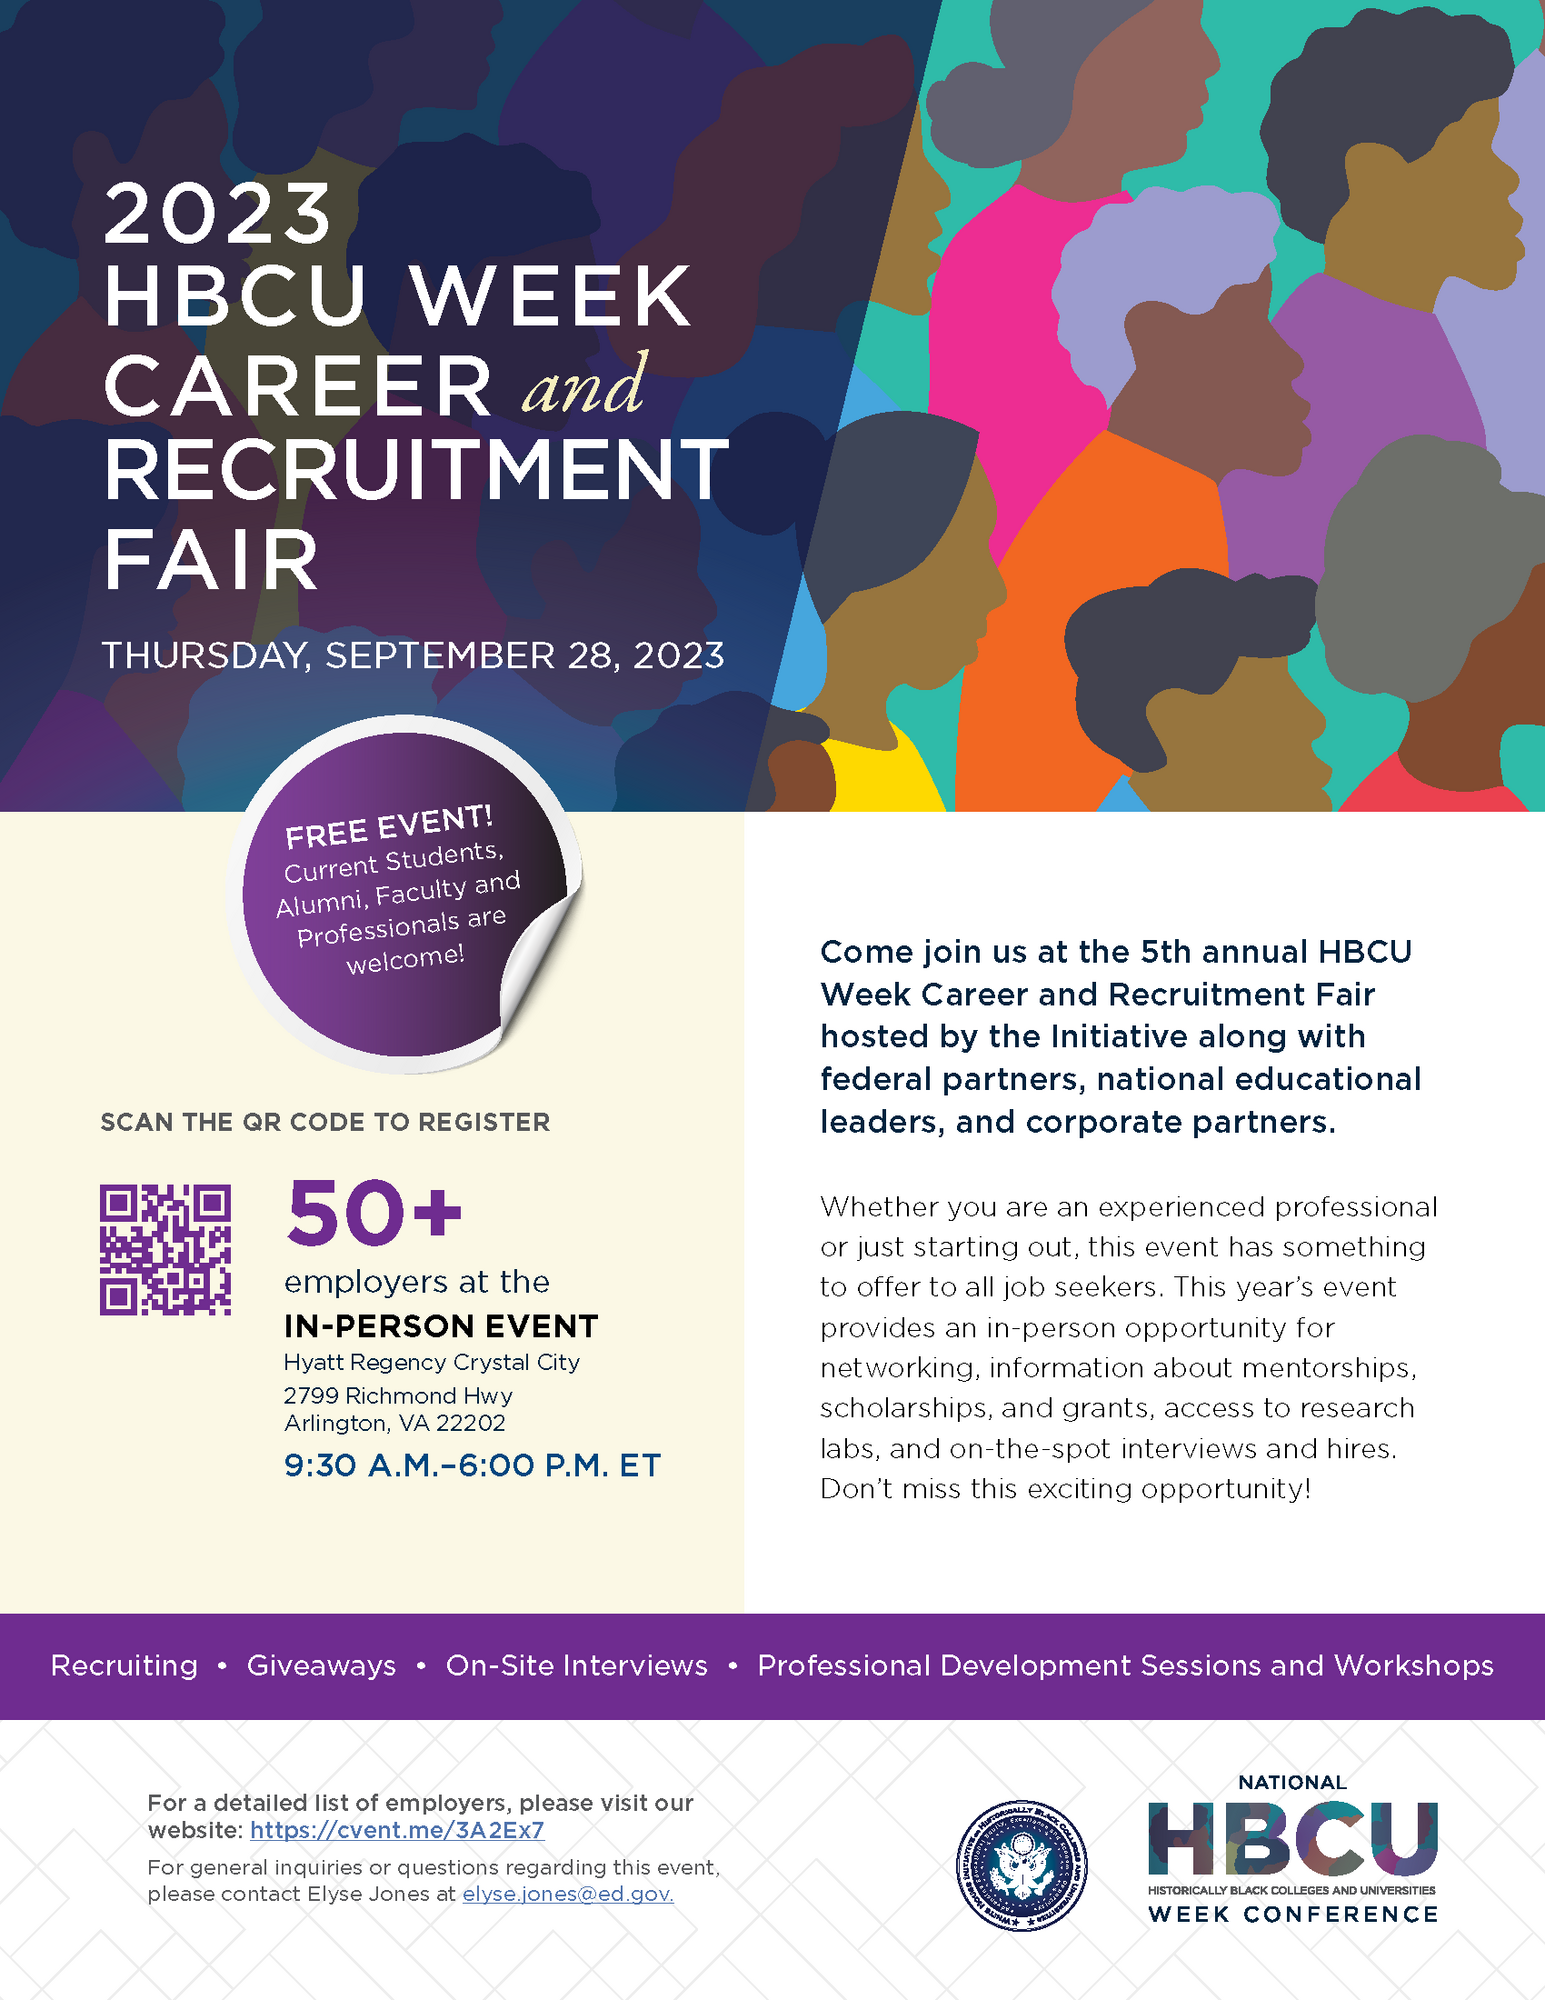 HBCU Week Career and Recruitment Fair 